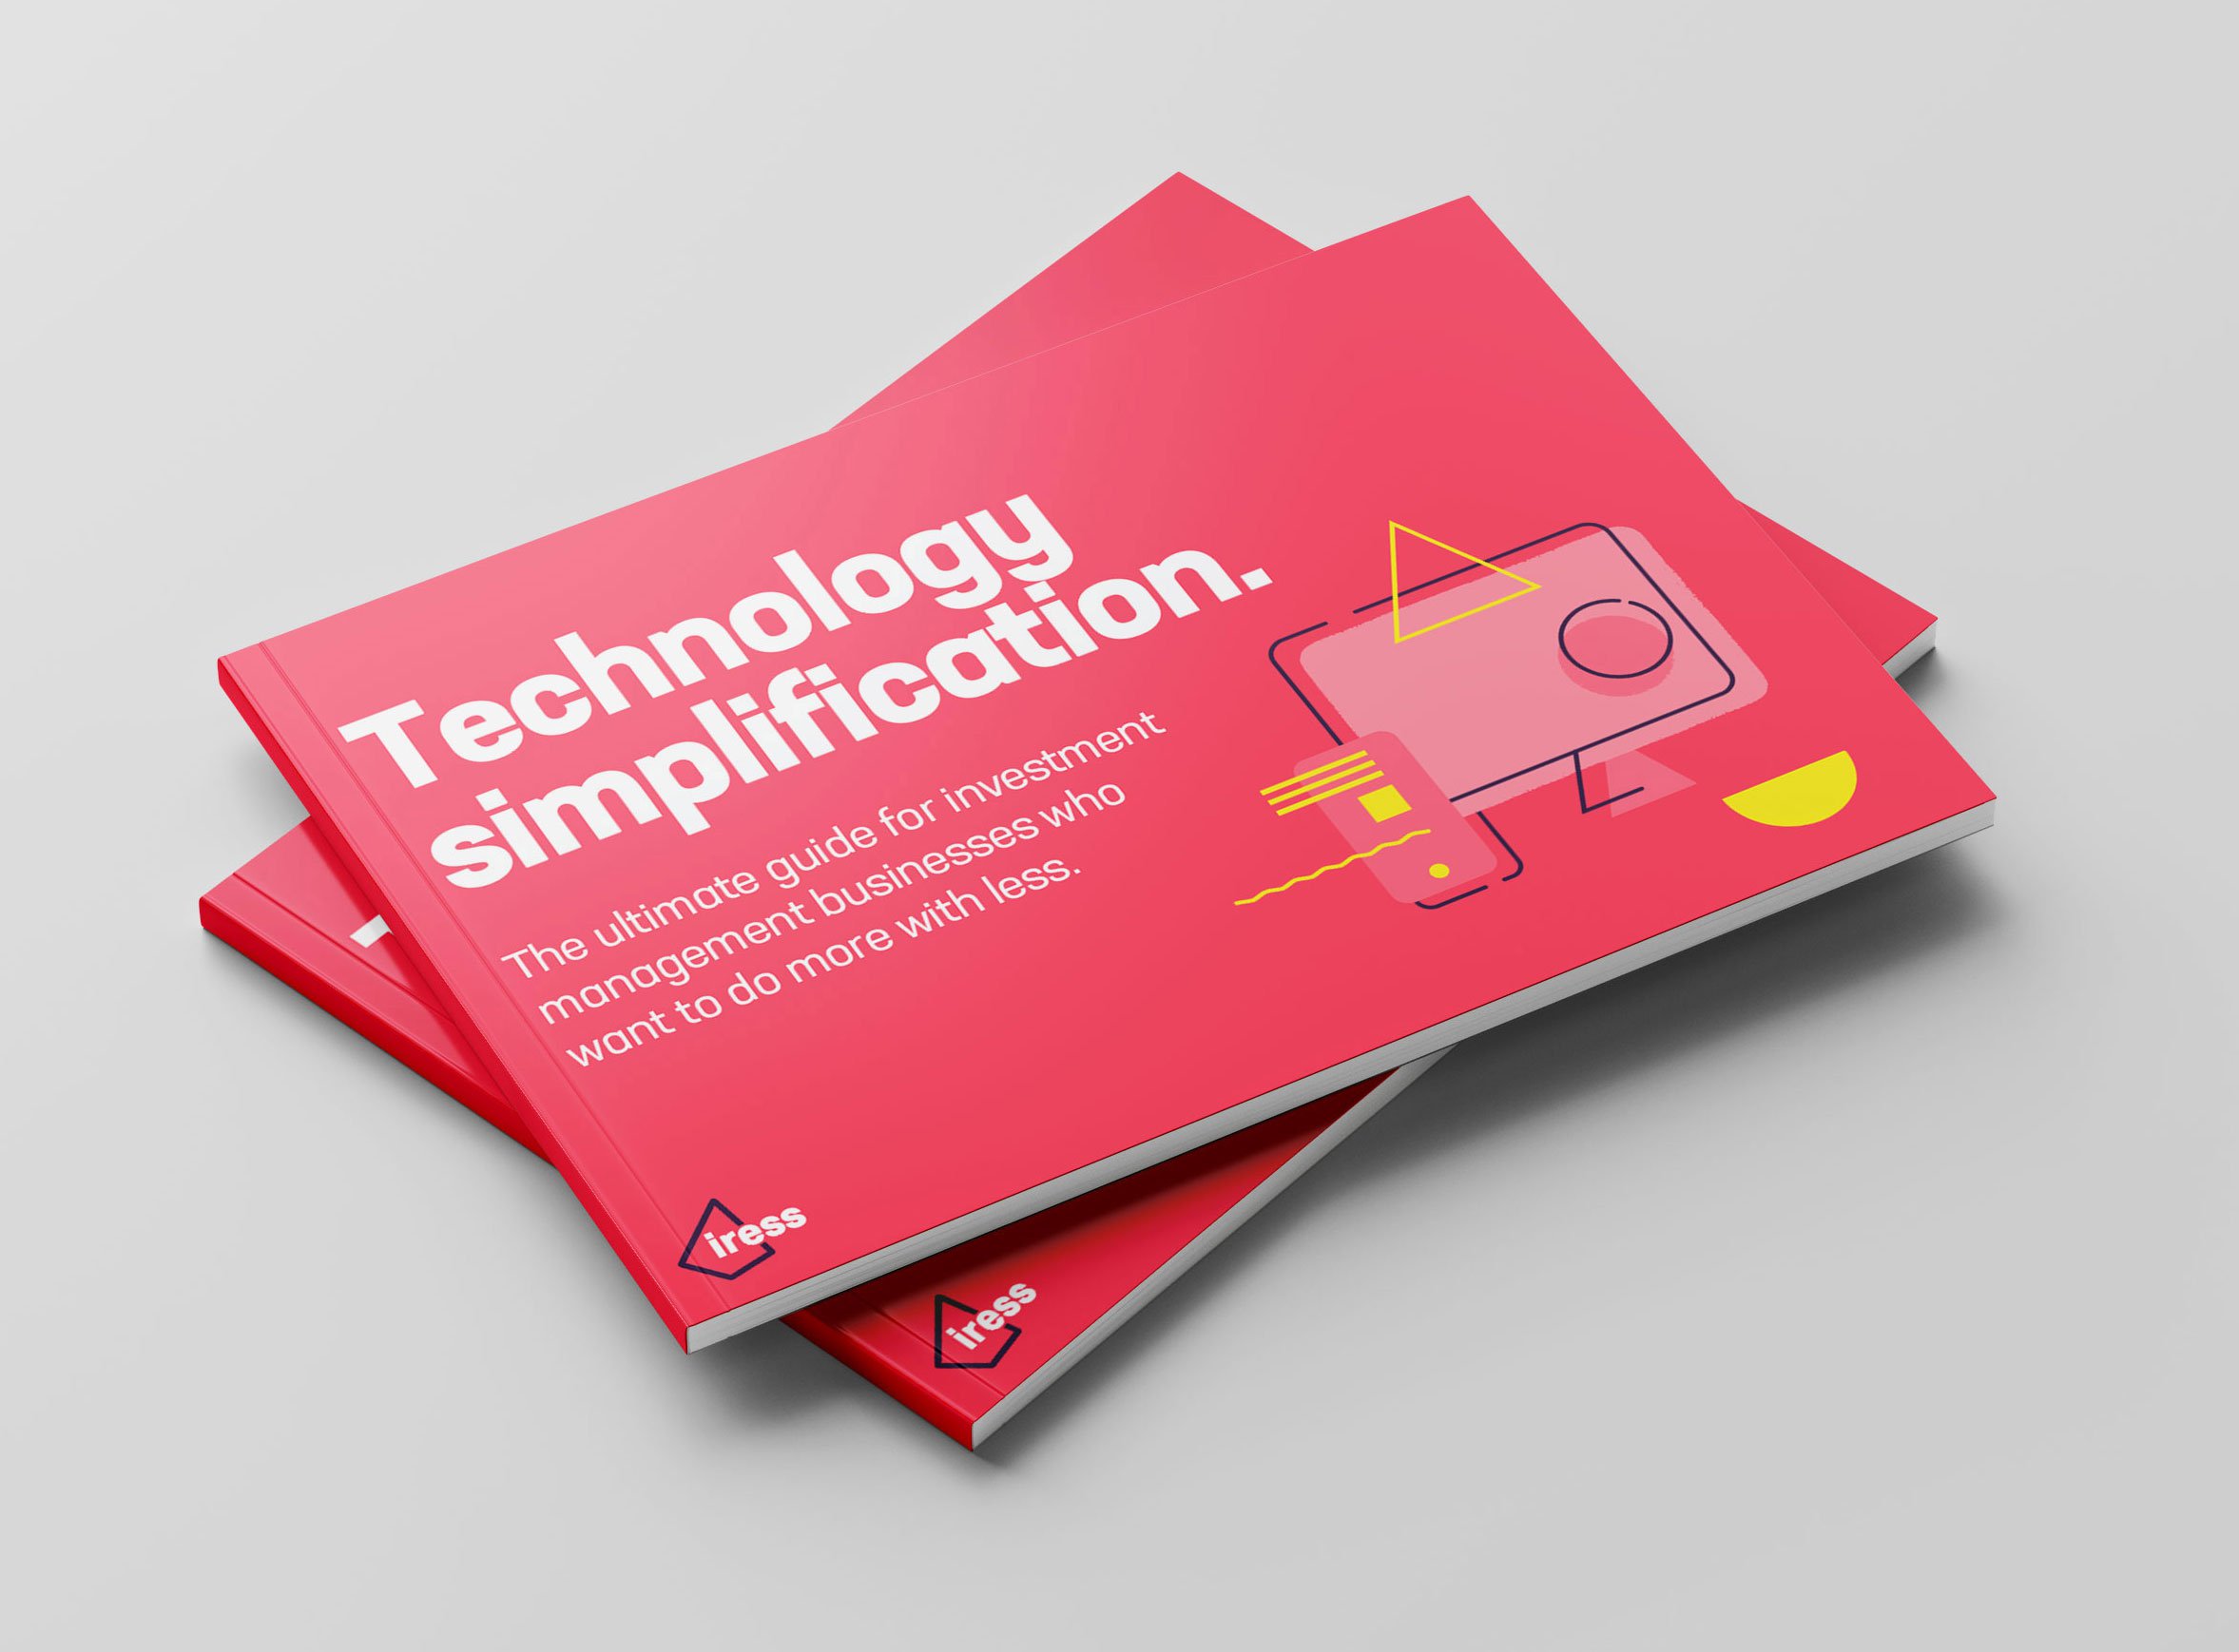 Techology simplification guide